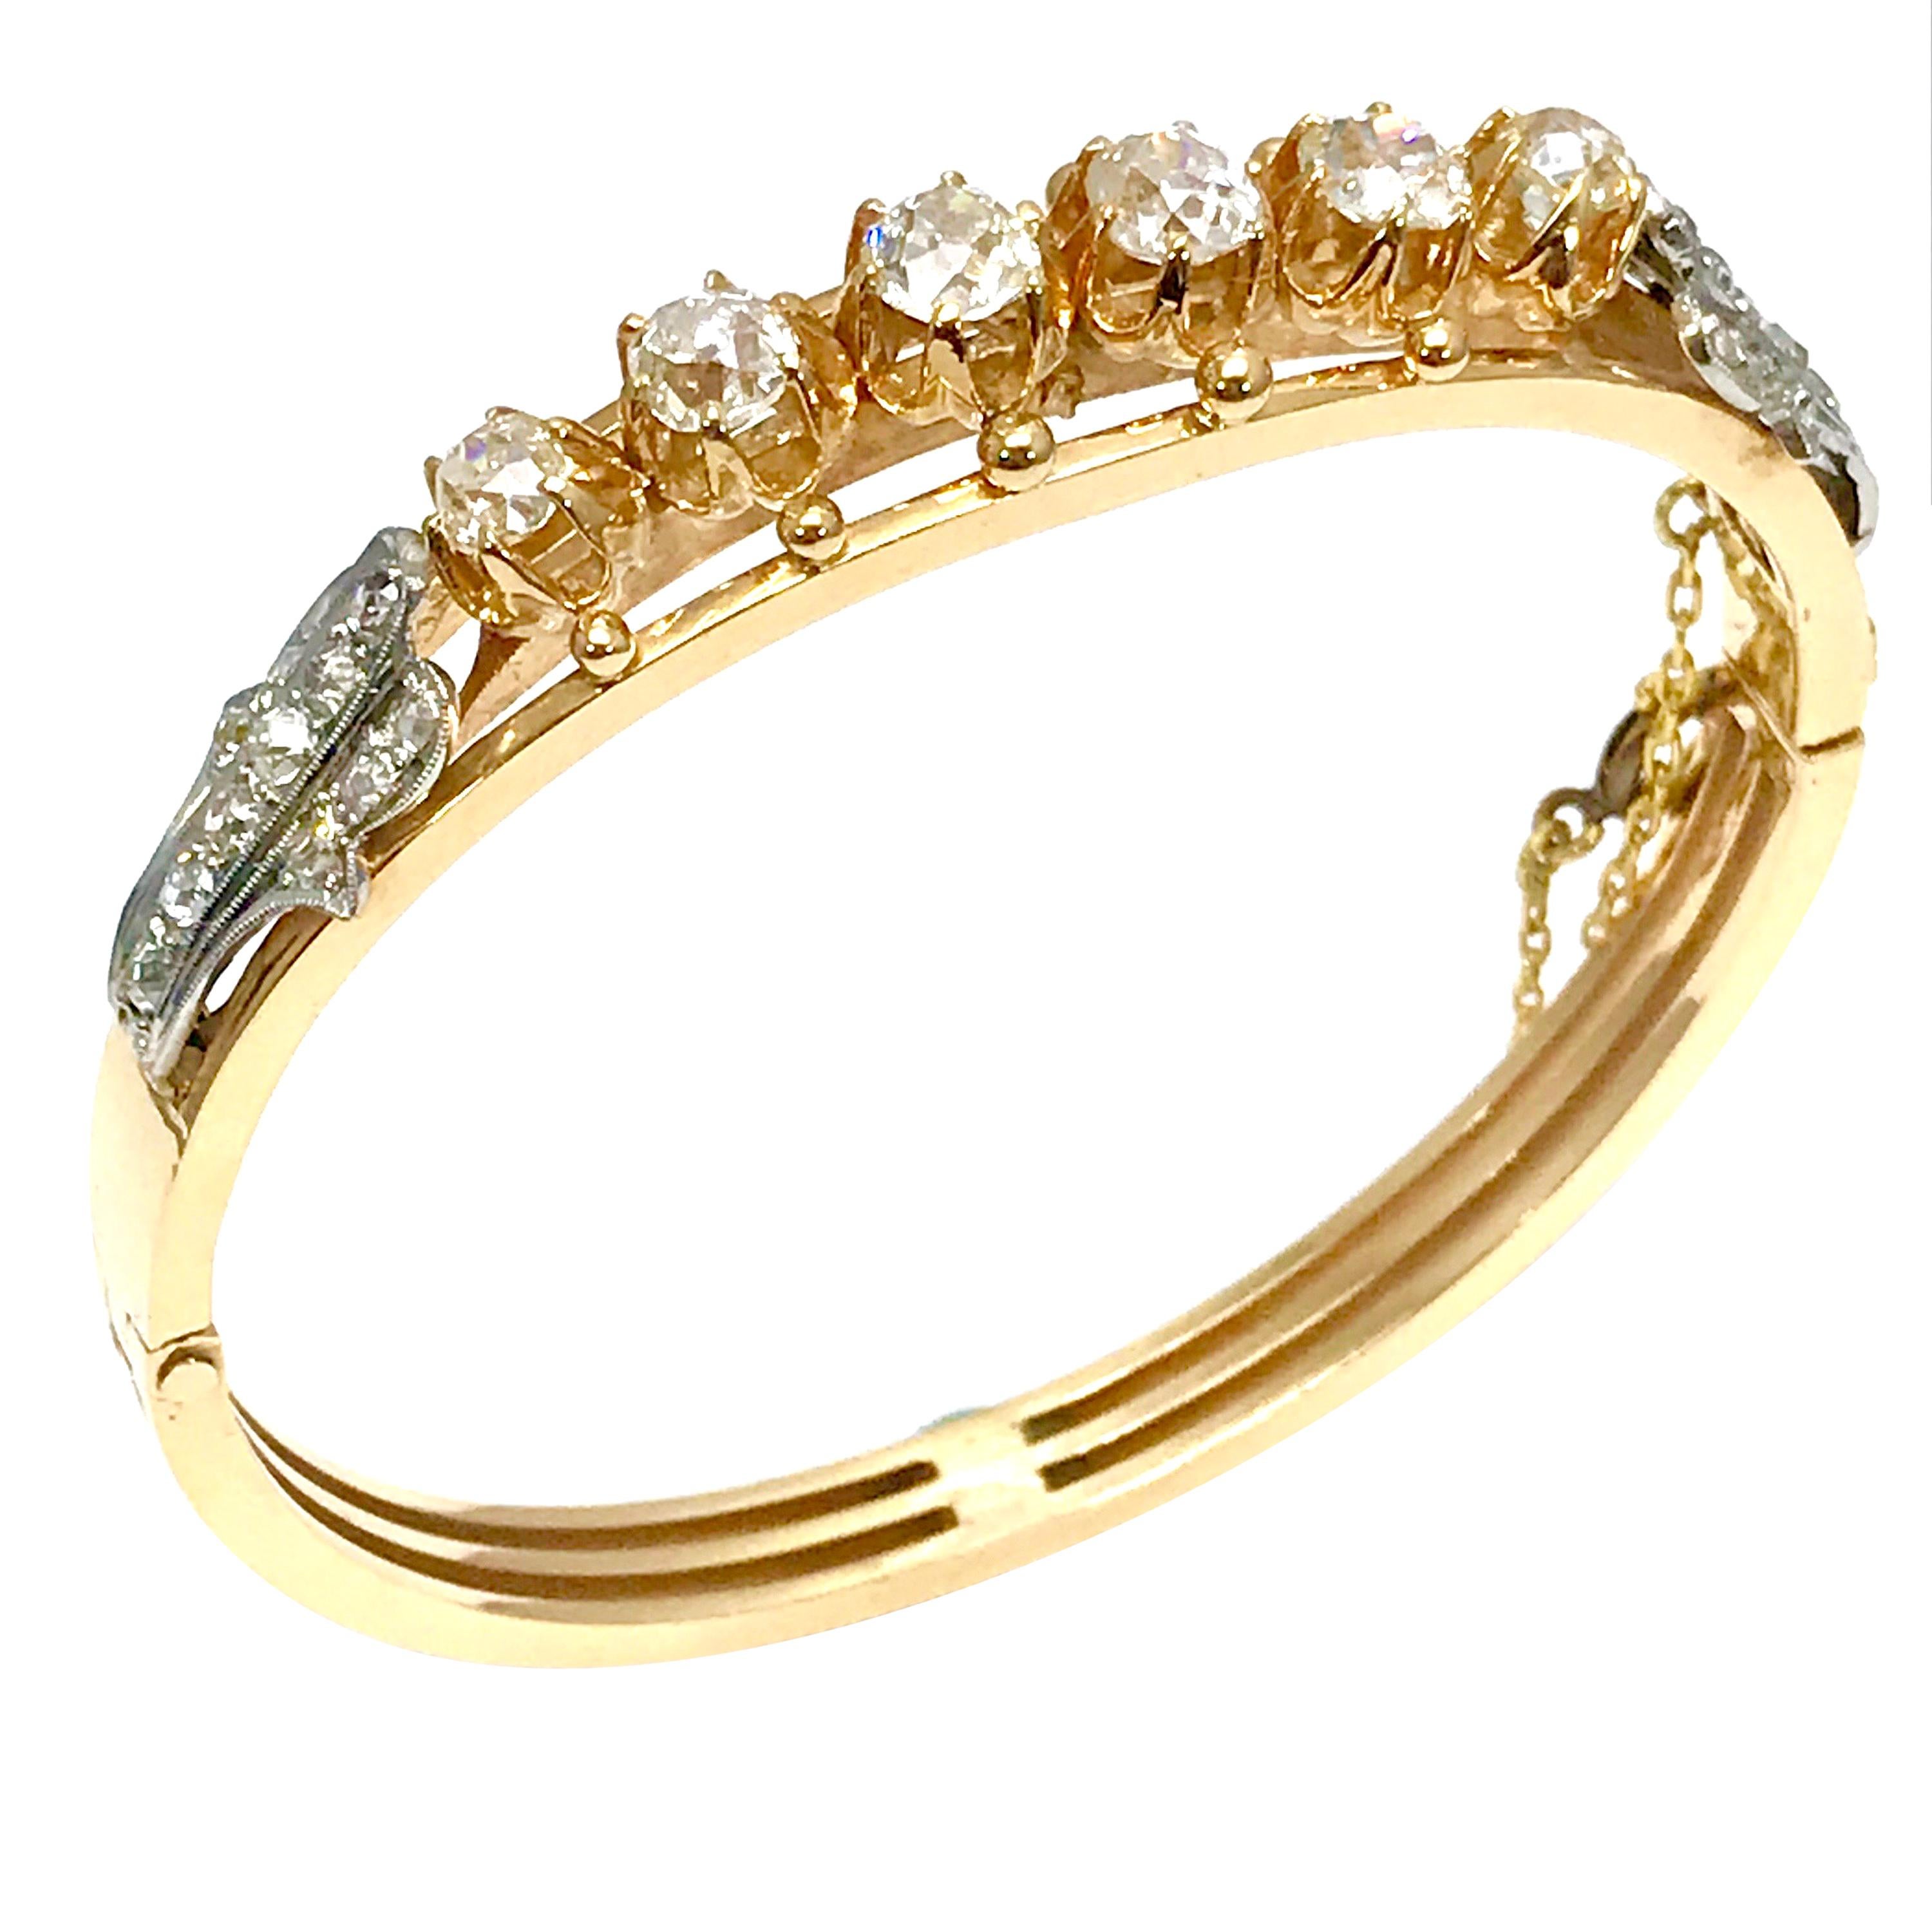 3.72 Carat Old Mine Cut and Rose Cut Diamond Yellow Gold Bangle Bracelet